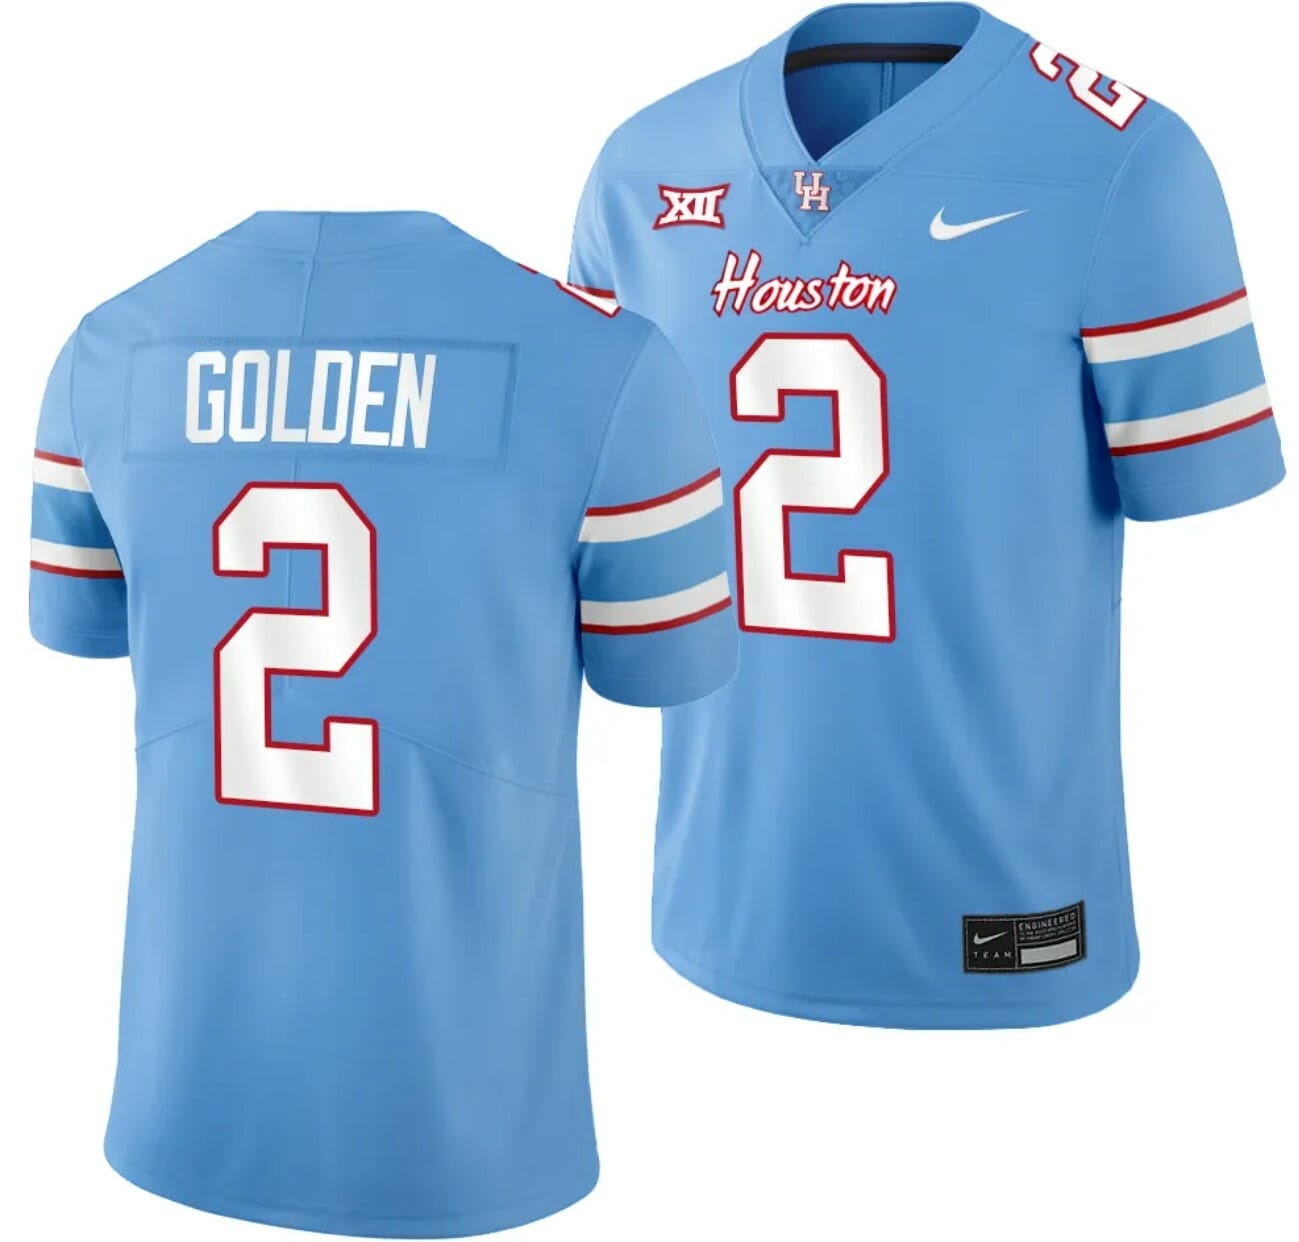 Houston Cougars Oilers Jersey Themed #2 Matthew Golden NCAA Football Blue